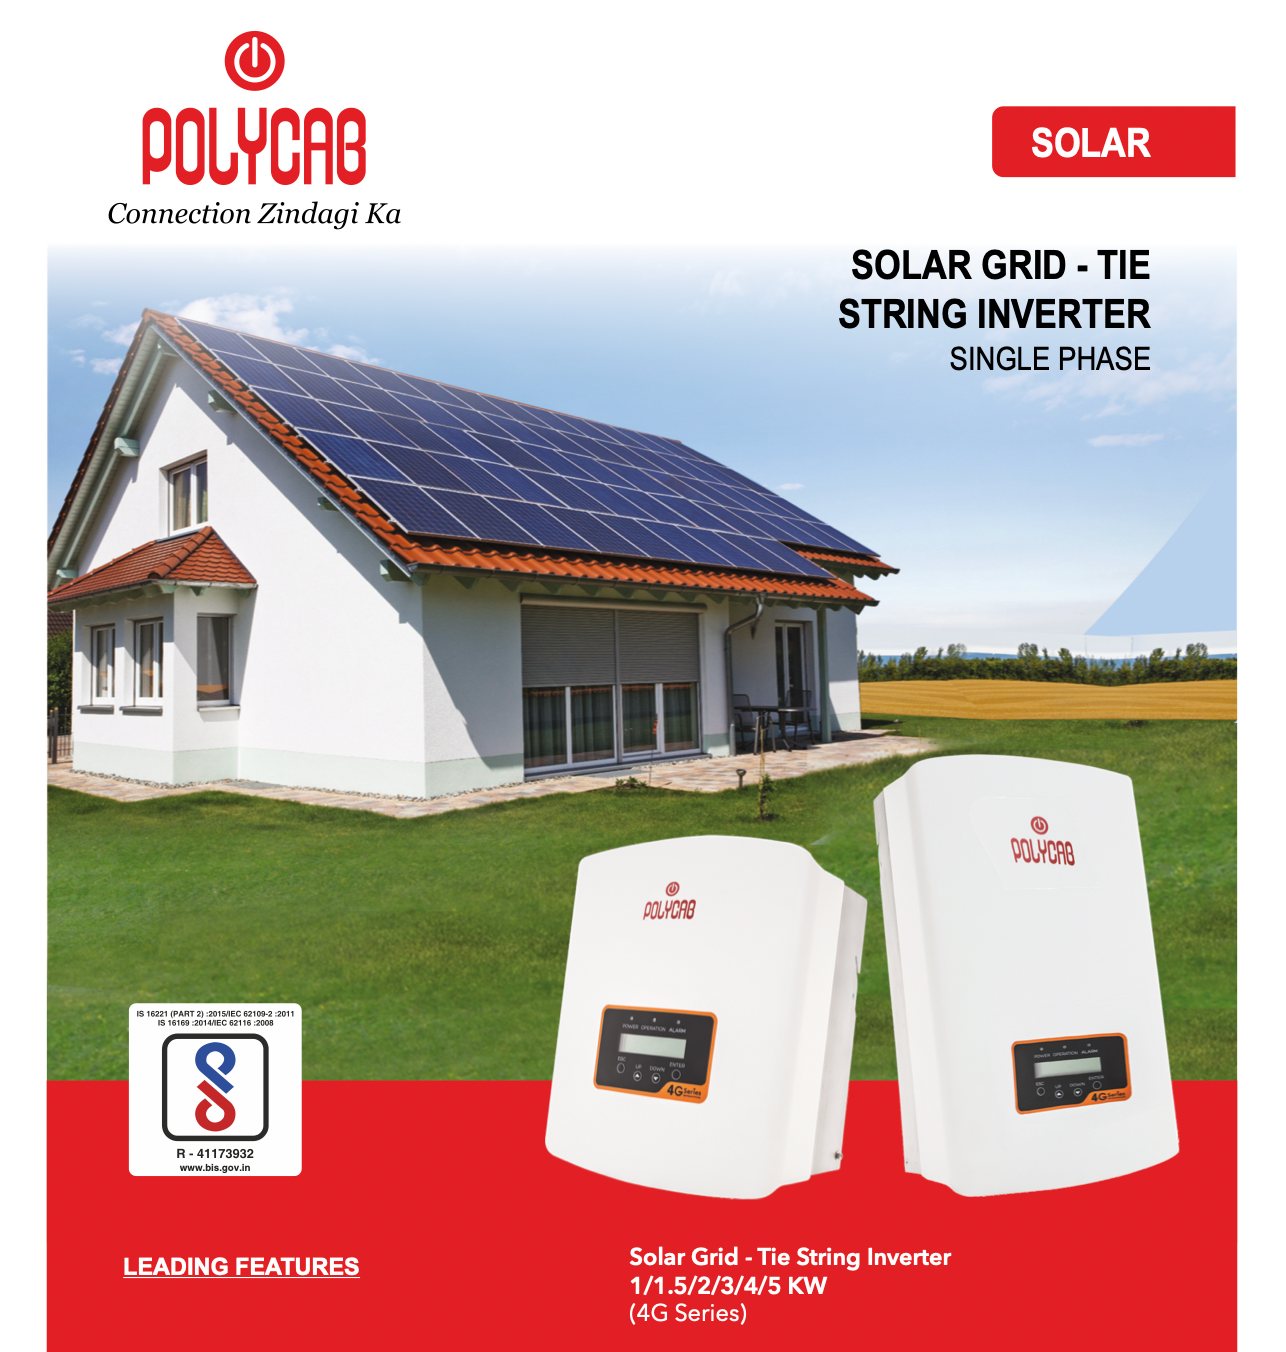 POLYCAB MAKE 3KW SOLAR GRID-TIE INVERTER